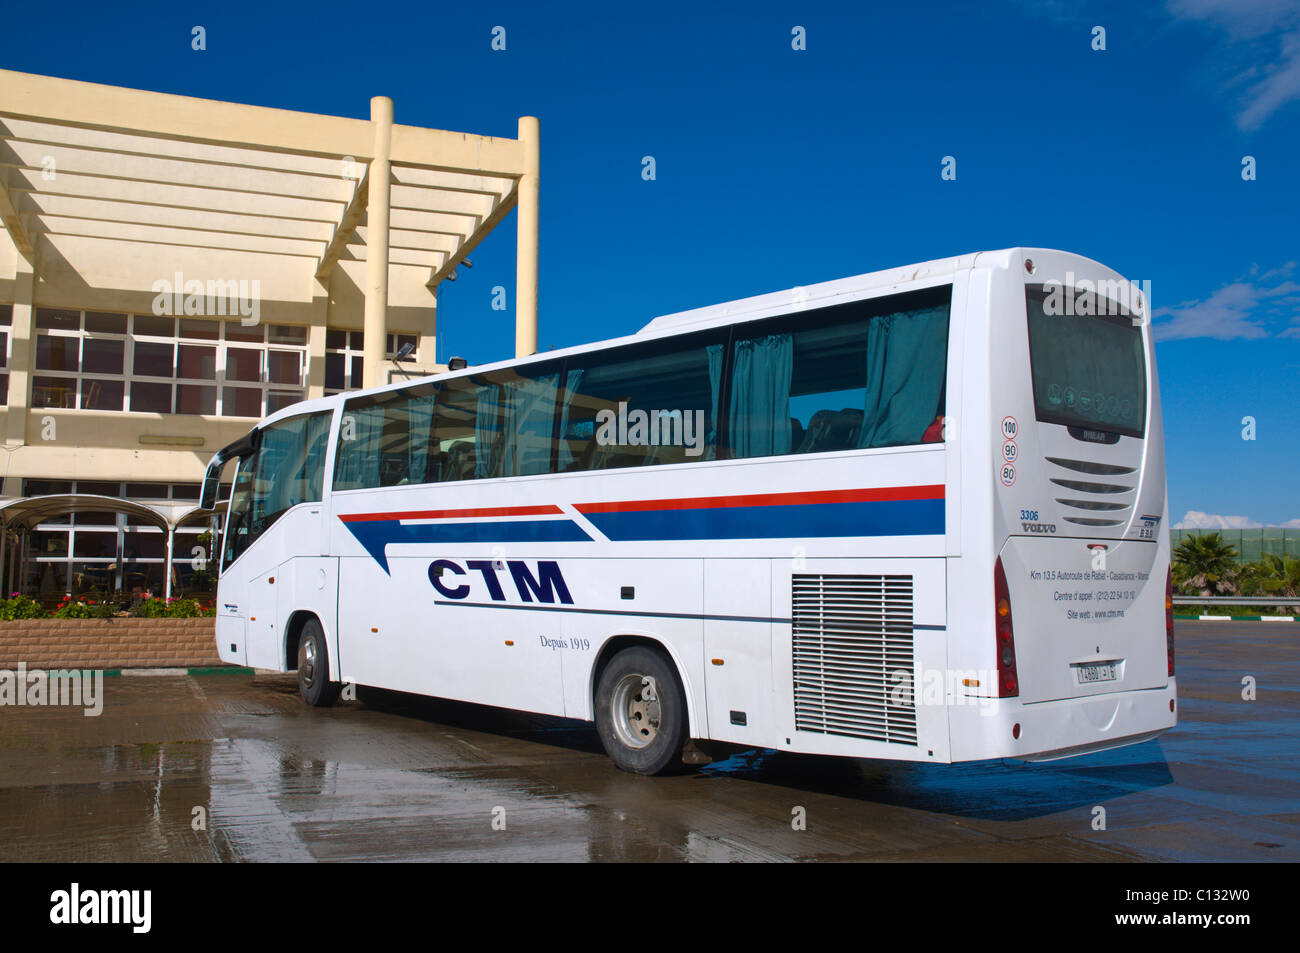 Bus moroccan -Fotos und -Bildmaterial in hoher Auflösung – Alamy